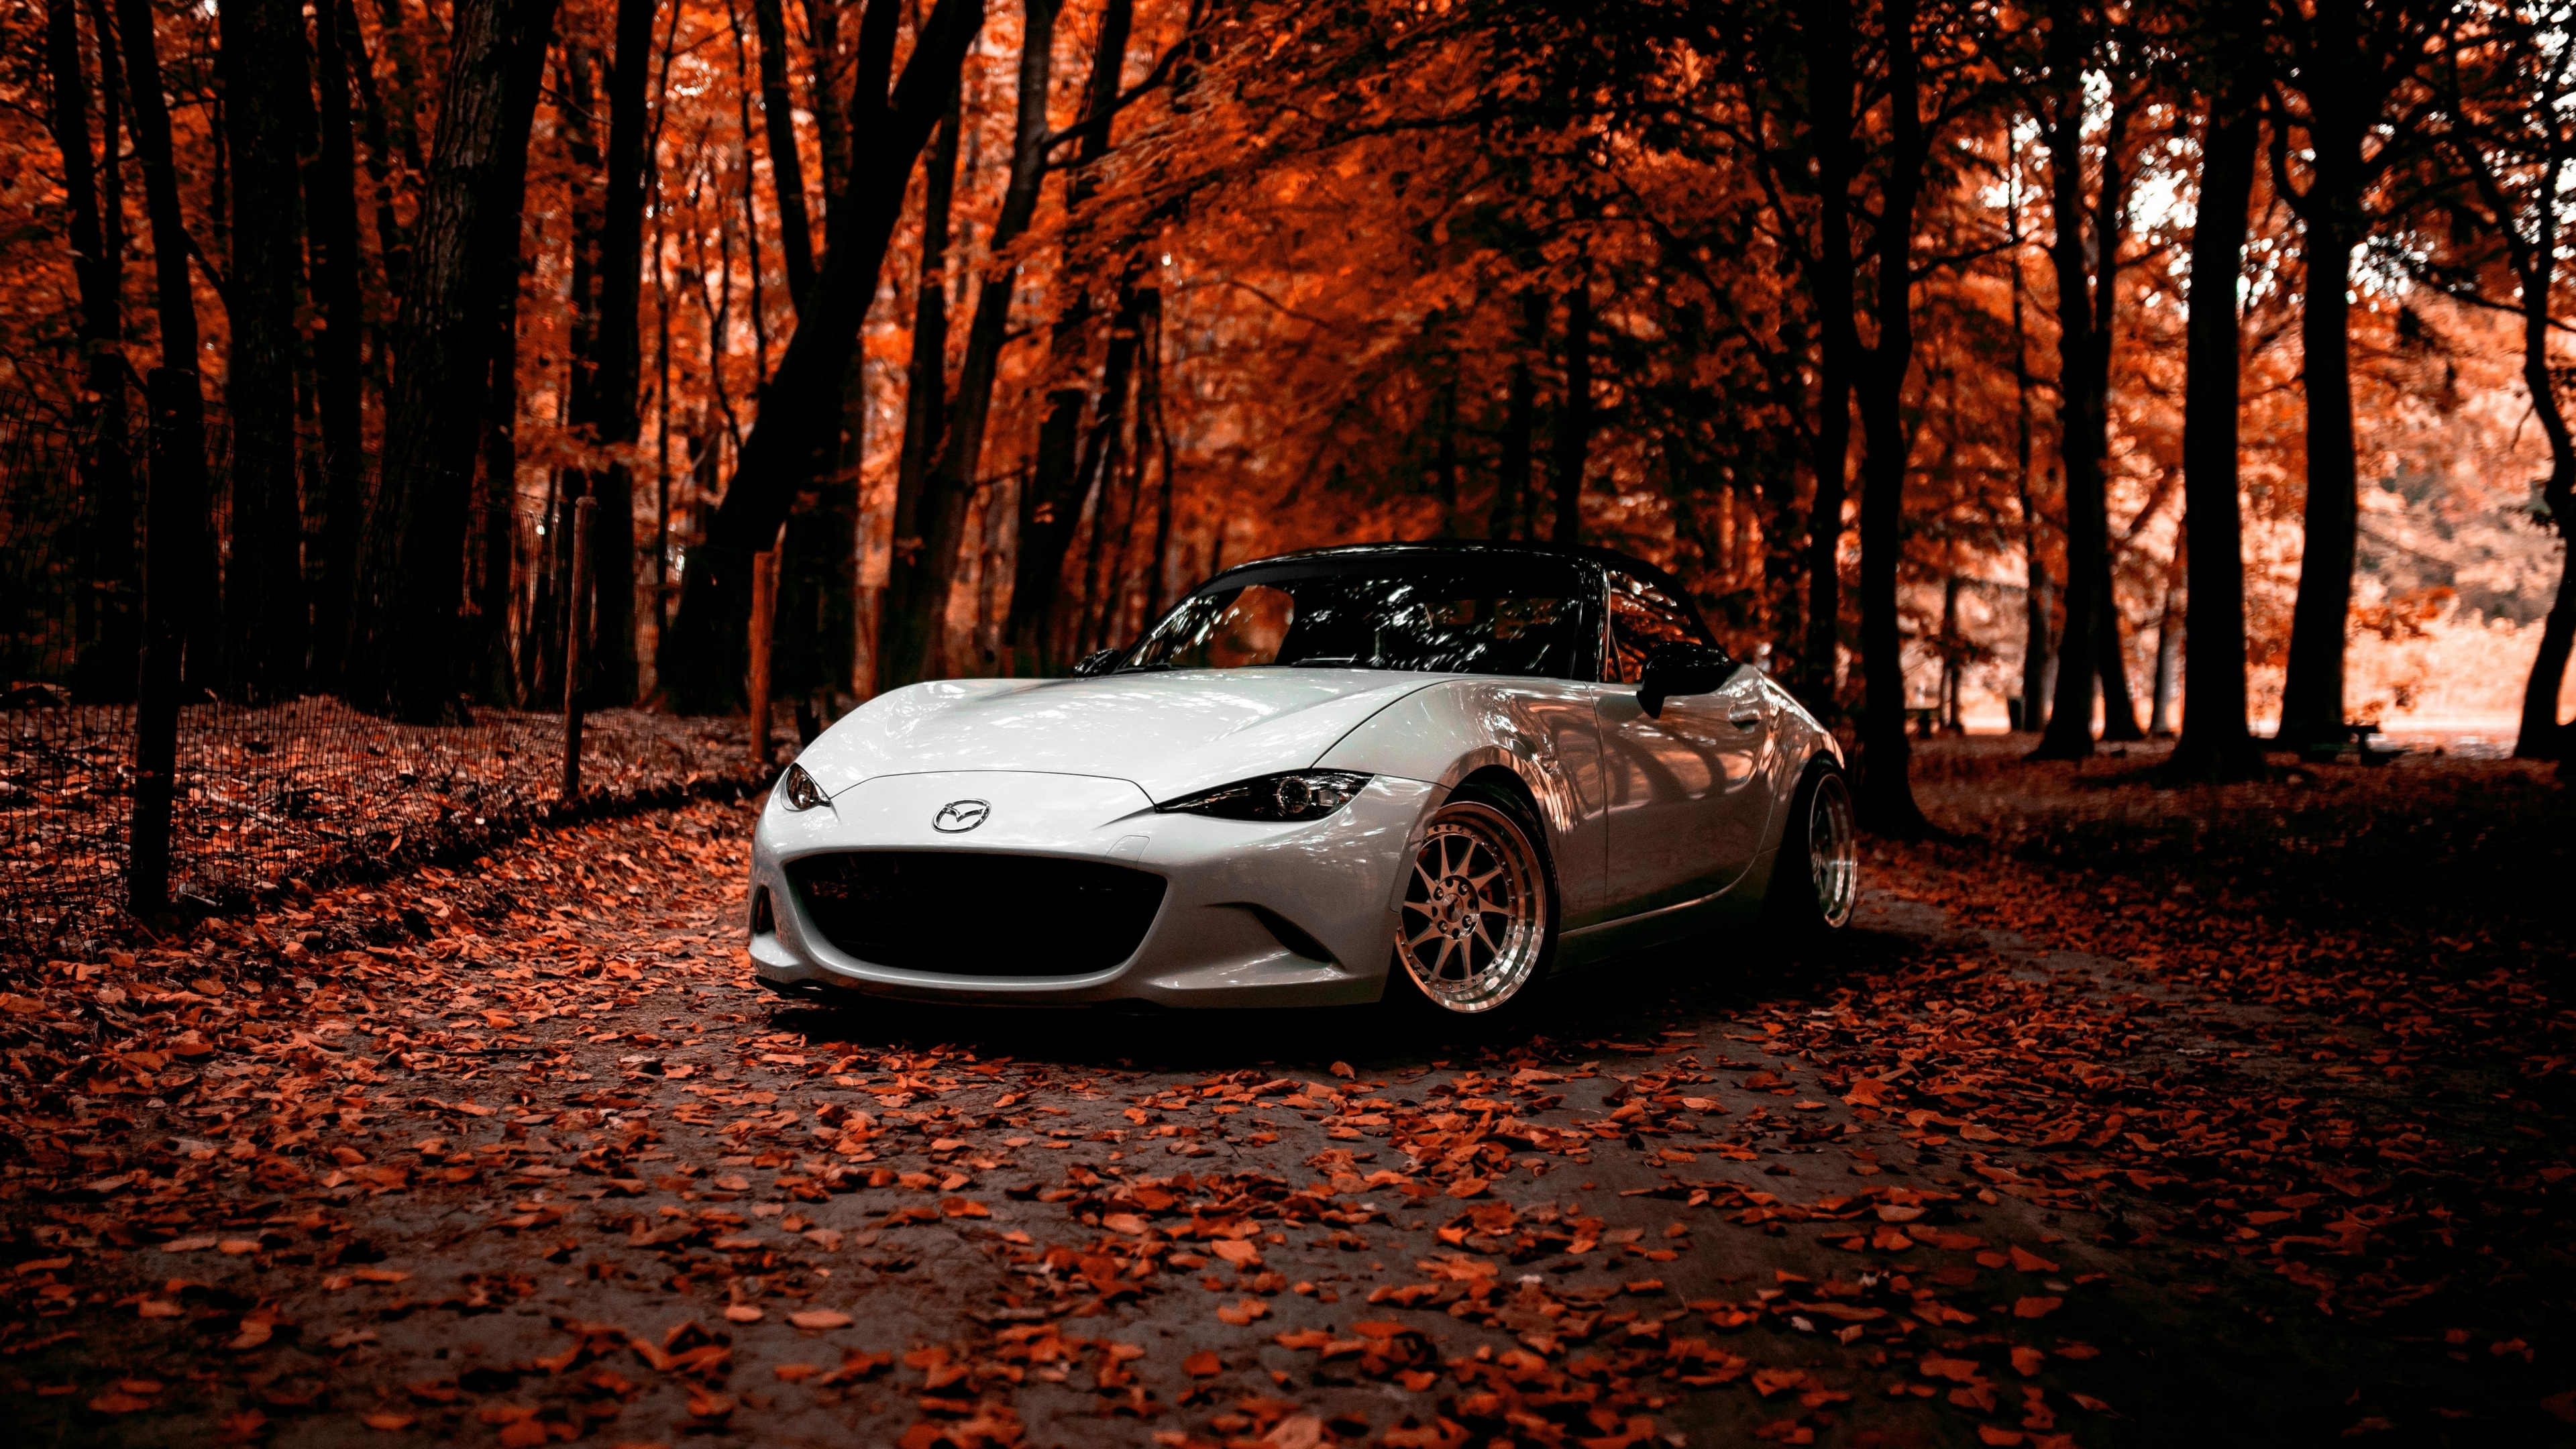 Download wallpaper 3840x2160 mazda, off-road, autumn, sports car 4k